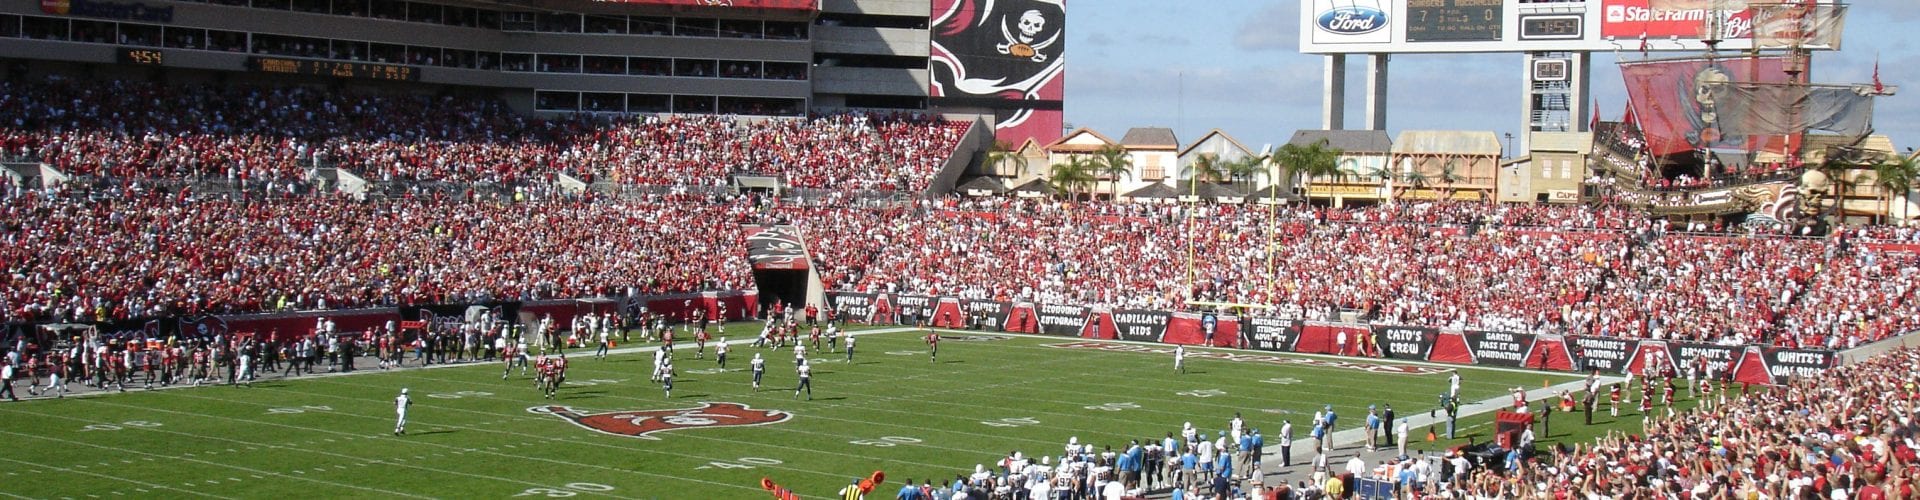 Tampa Bay Buccaneers home stadium Raymond james Stadium in Tampa